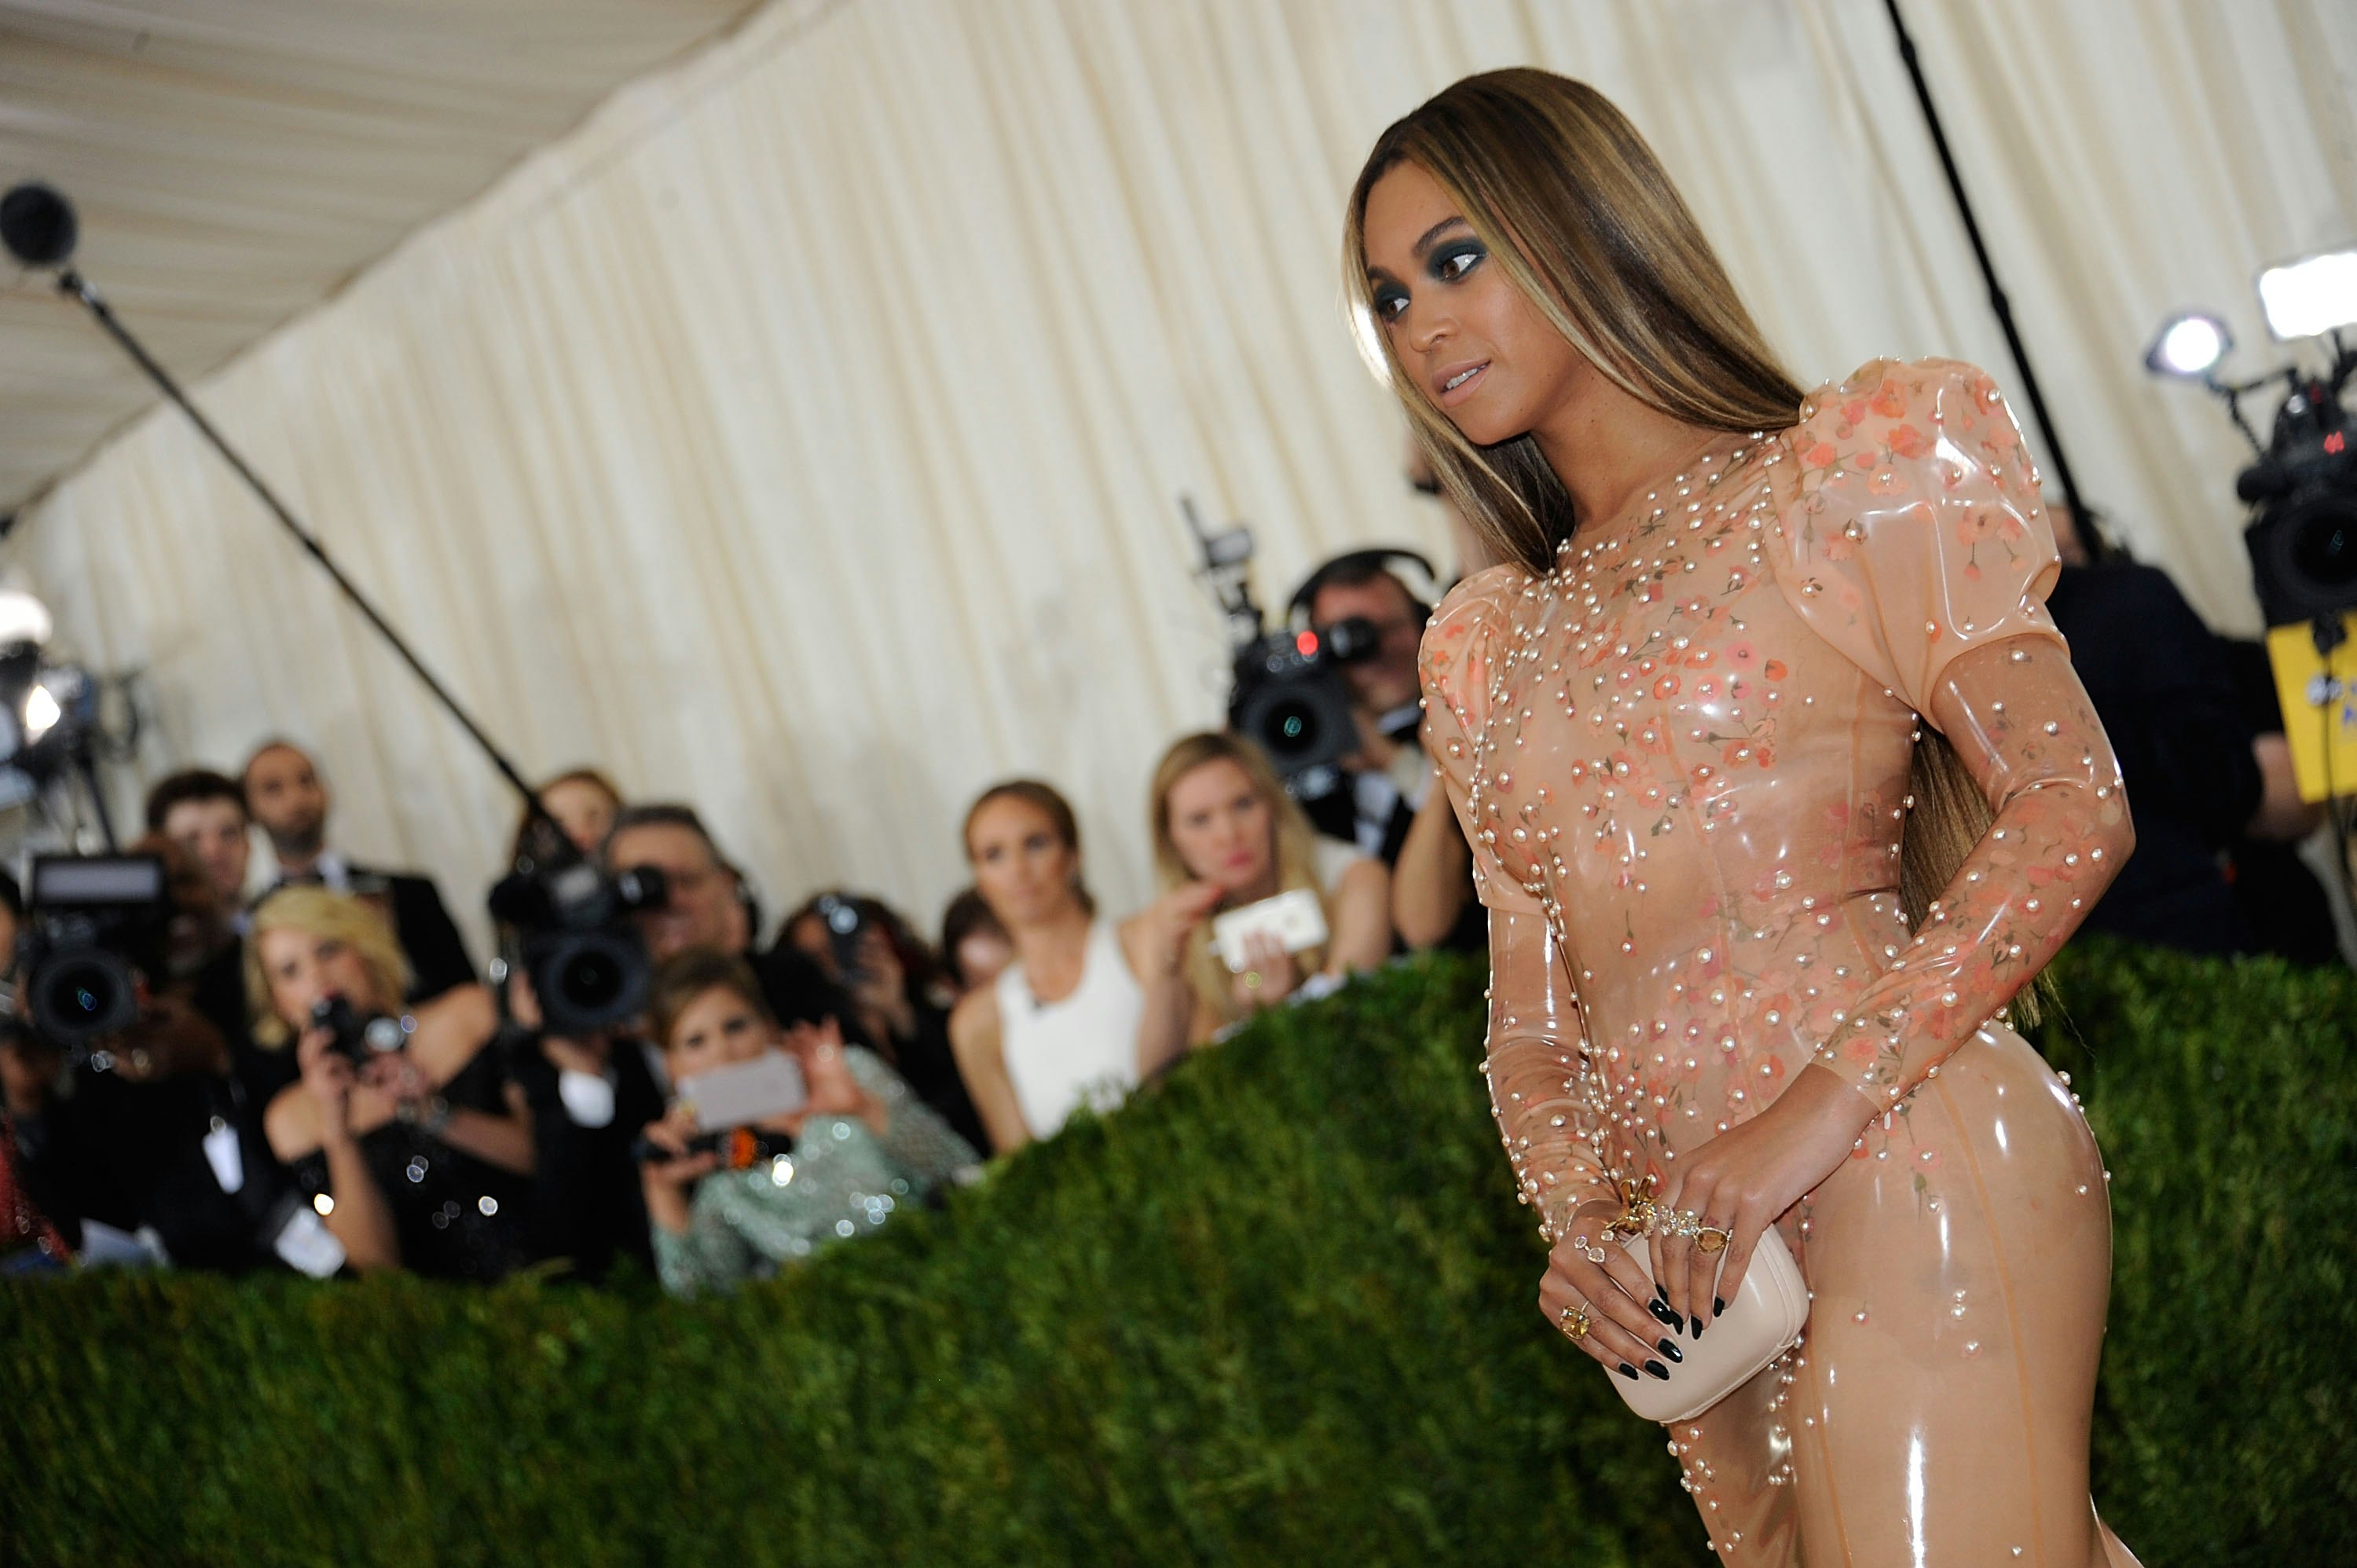 Beyonce Makeup and Hair at the Met Gala 2016